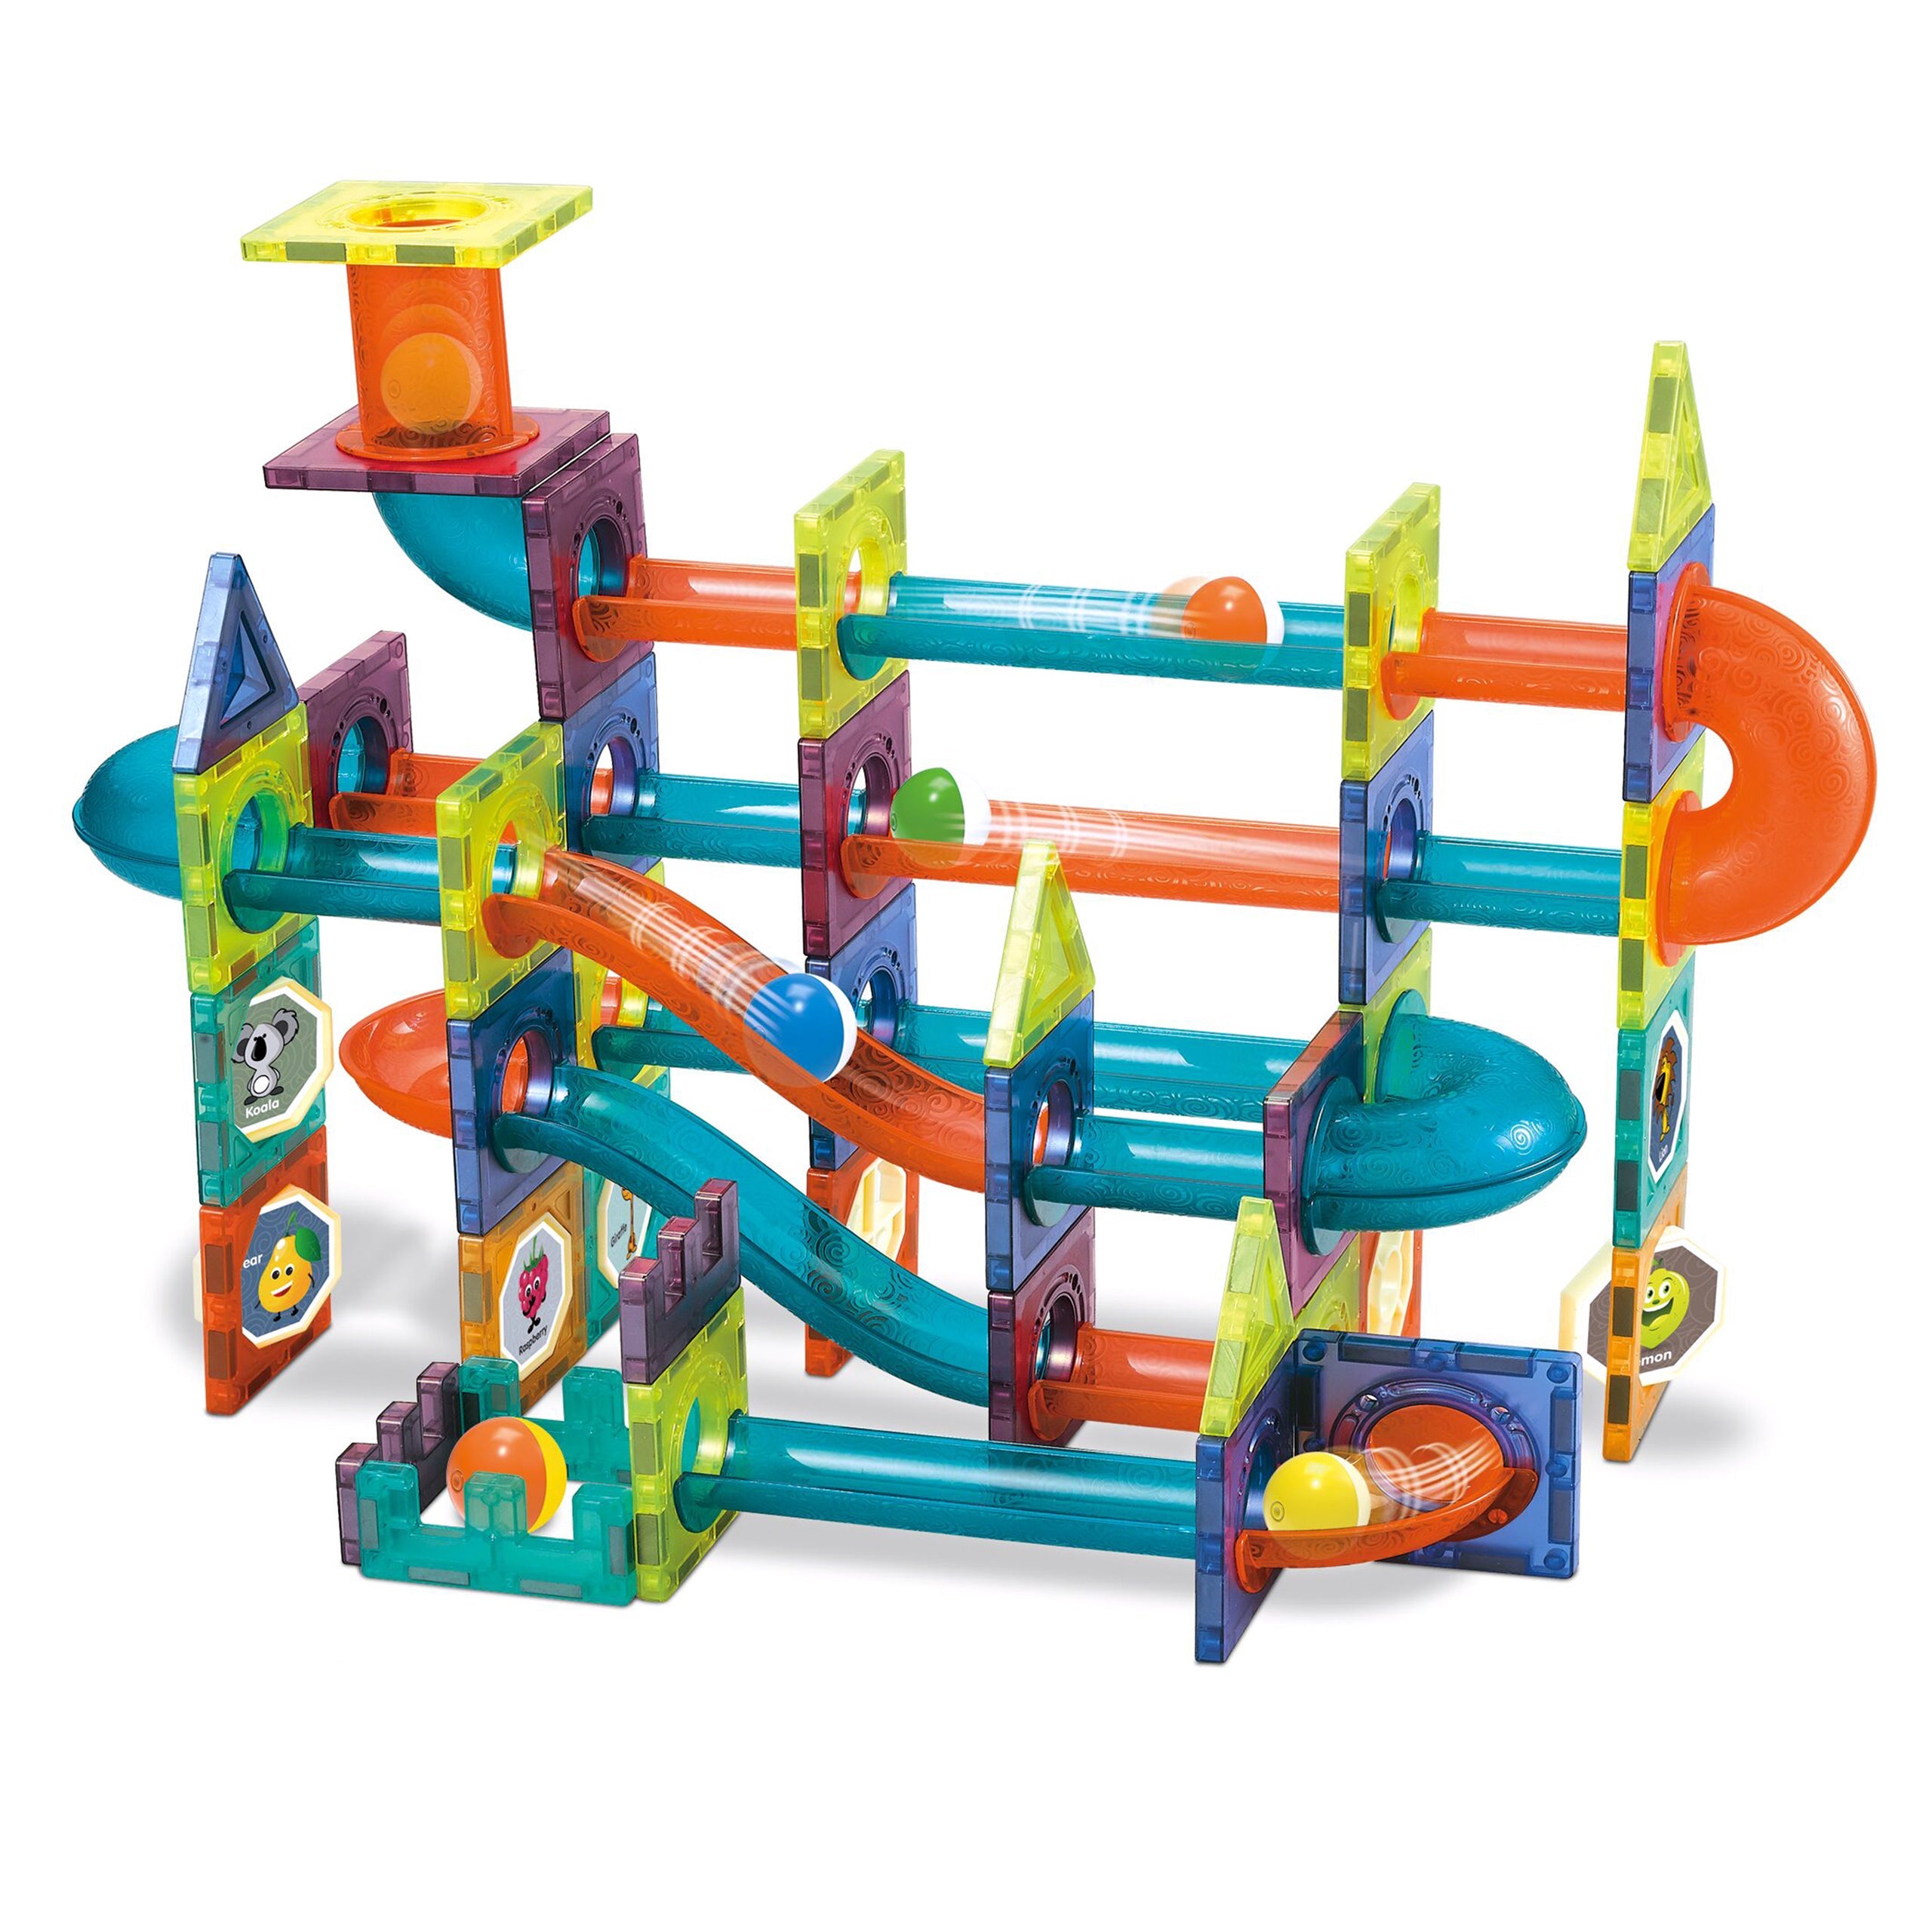 Magnetic Tiles 132pcs Magnetic 3D Educational Building Blocks Set Toys for Kids